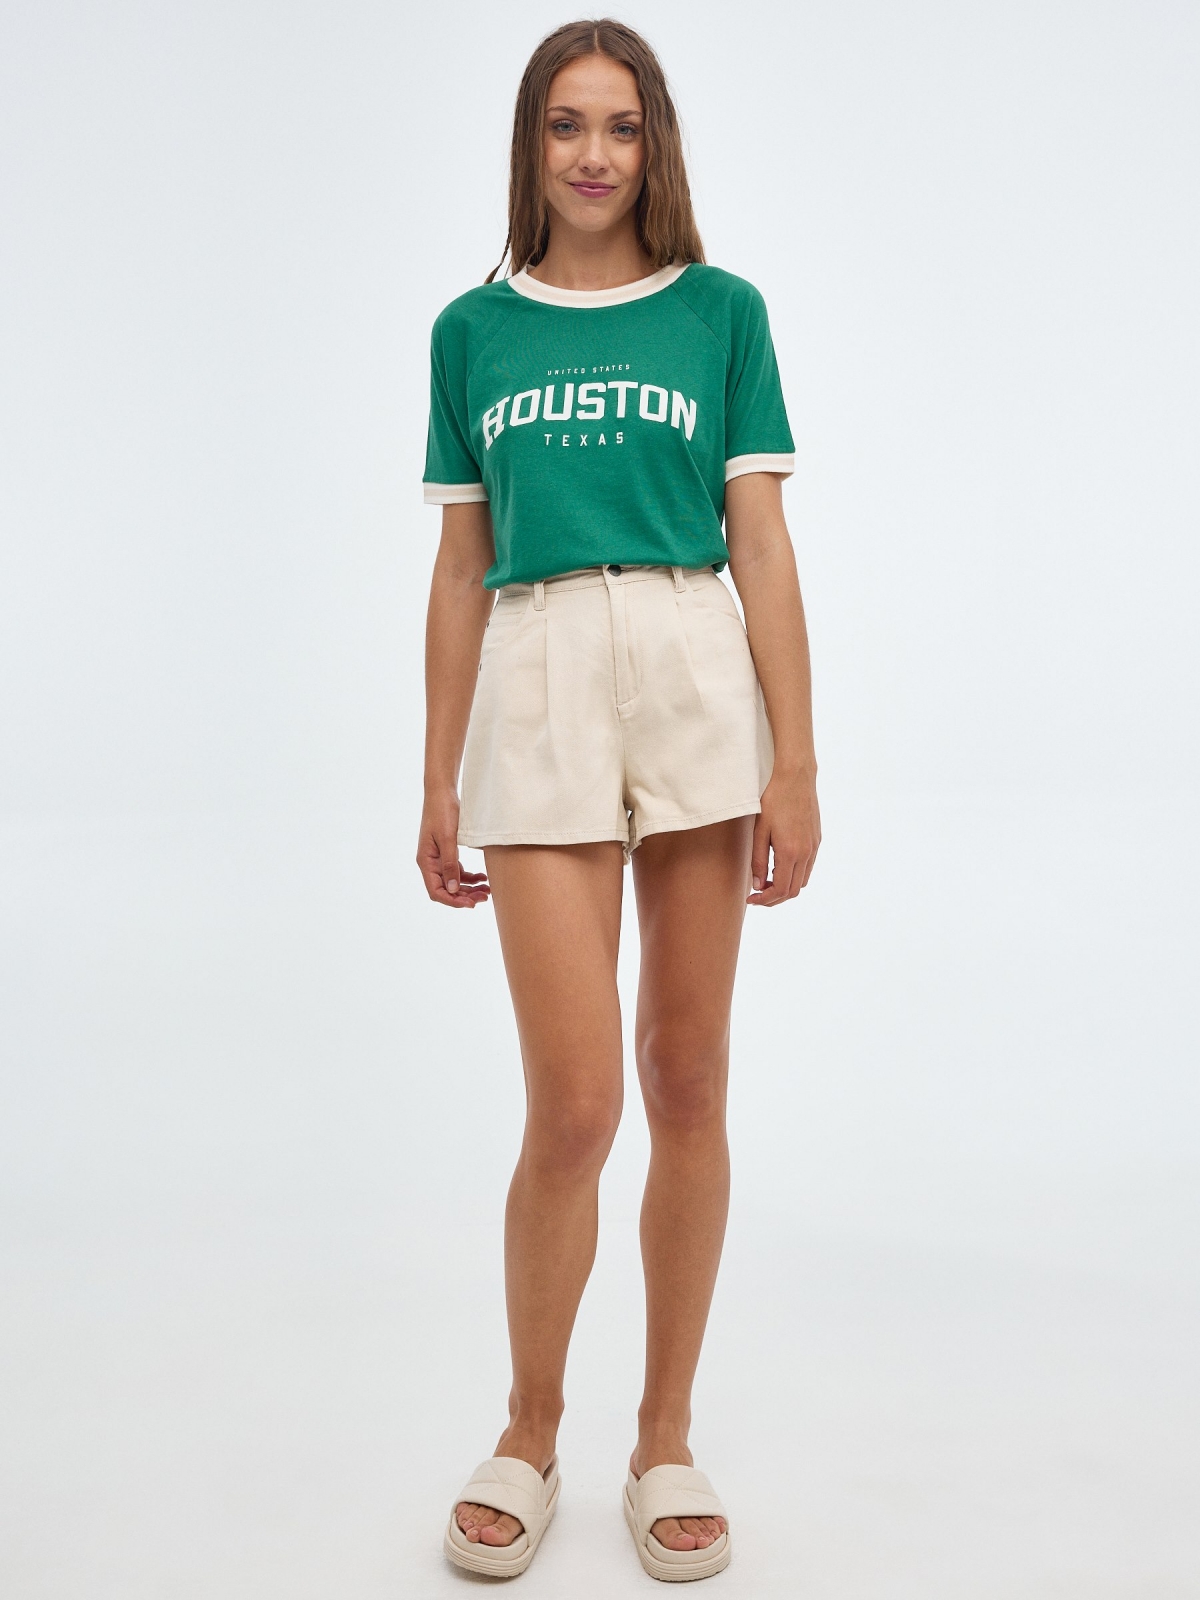 Camiseta Houston Texas verde vista general frontal